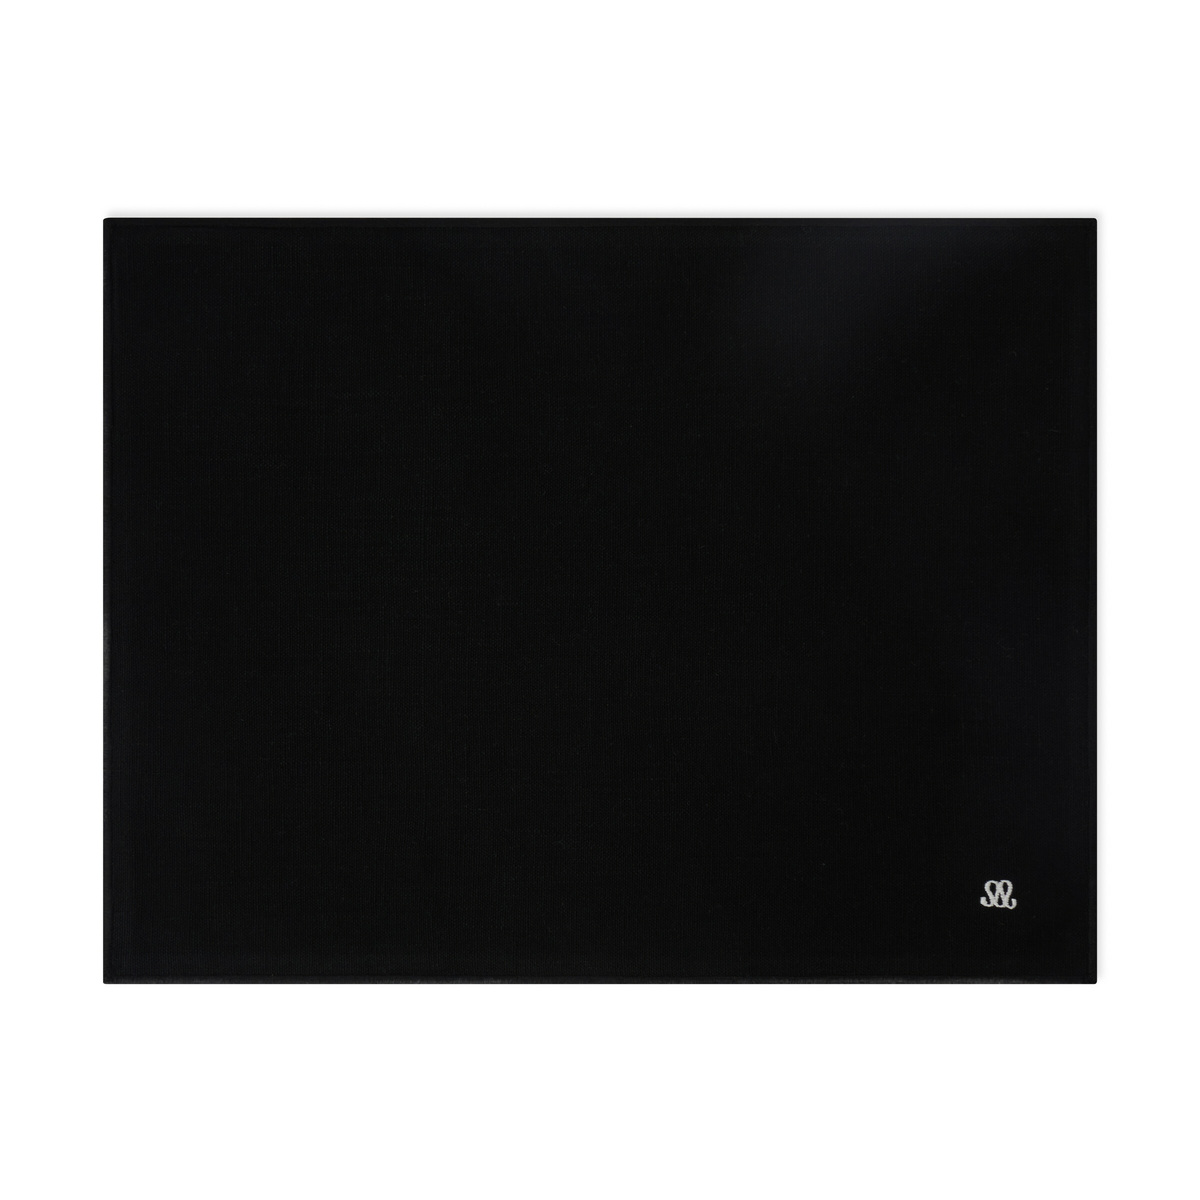 Placemat Sarah, Black - 45 x 35 cm - image 1